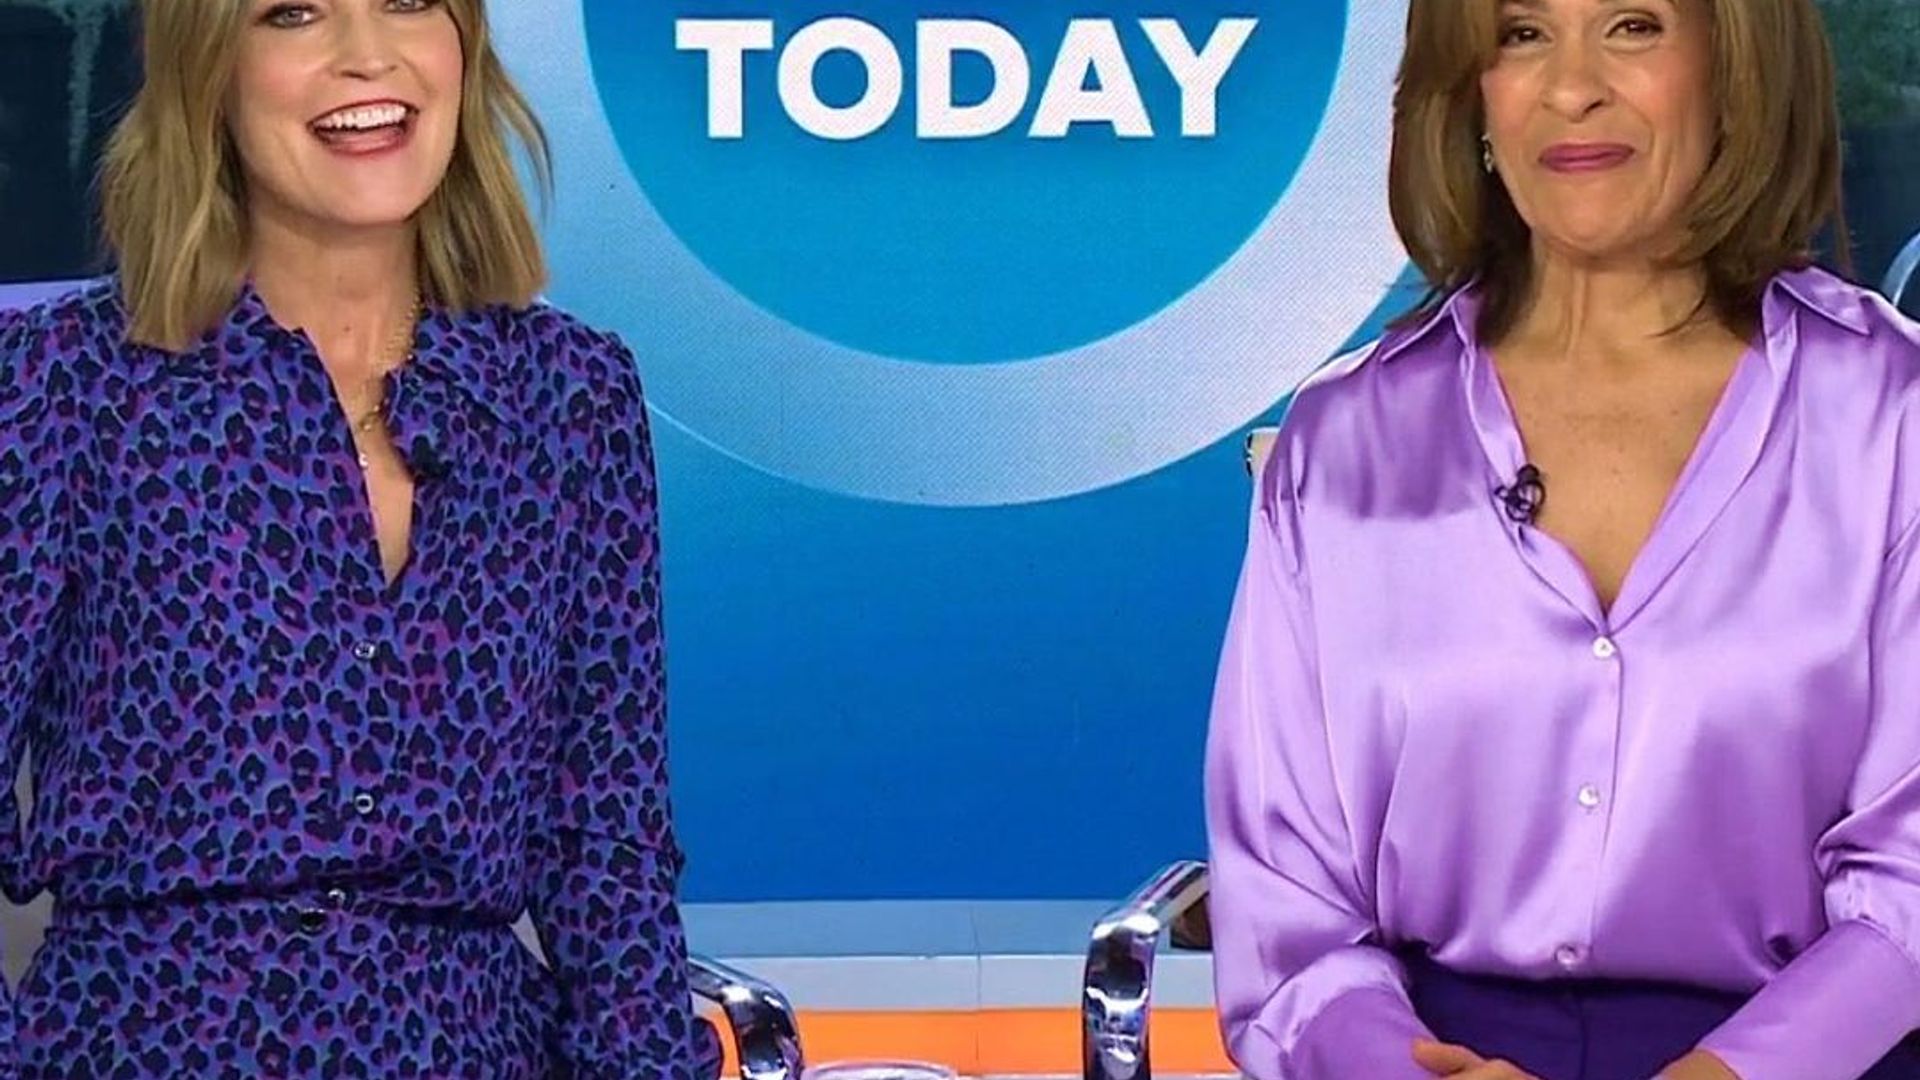 Hoda Kotb and Savannah Guthrie were also dressed in purple on Spirit Day